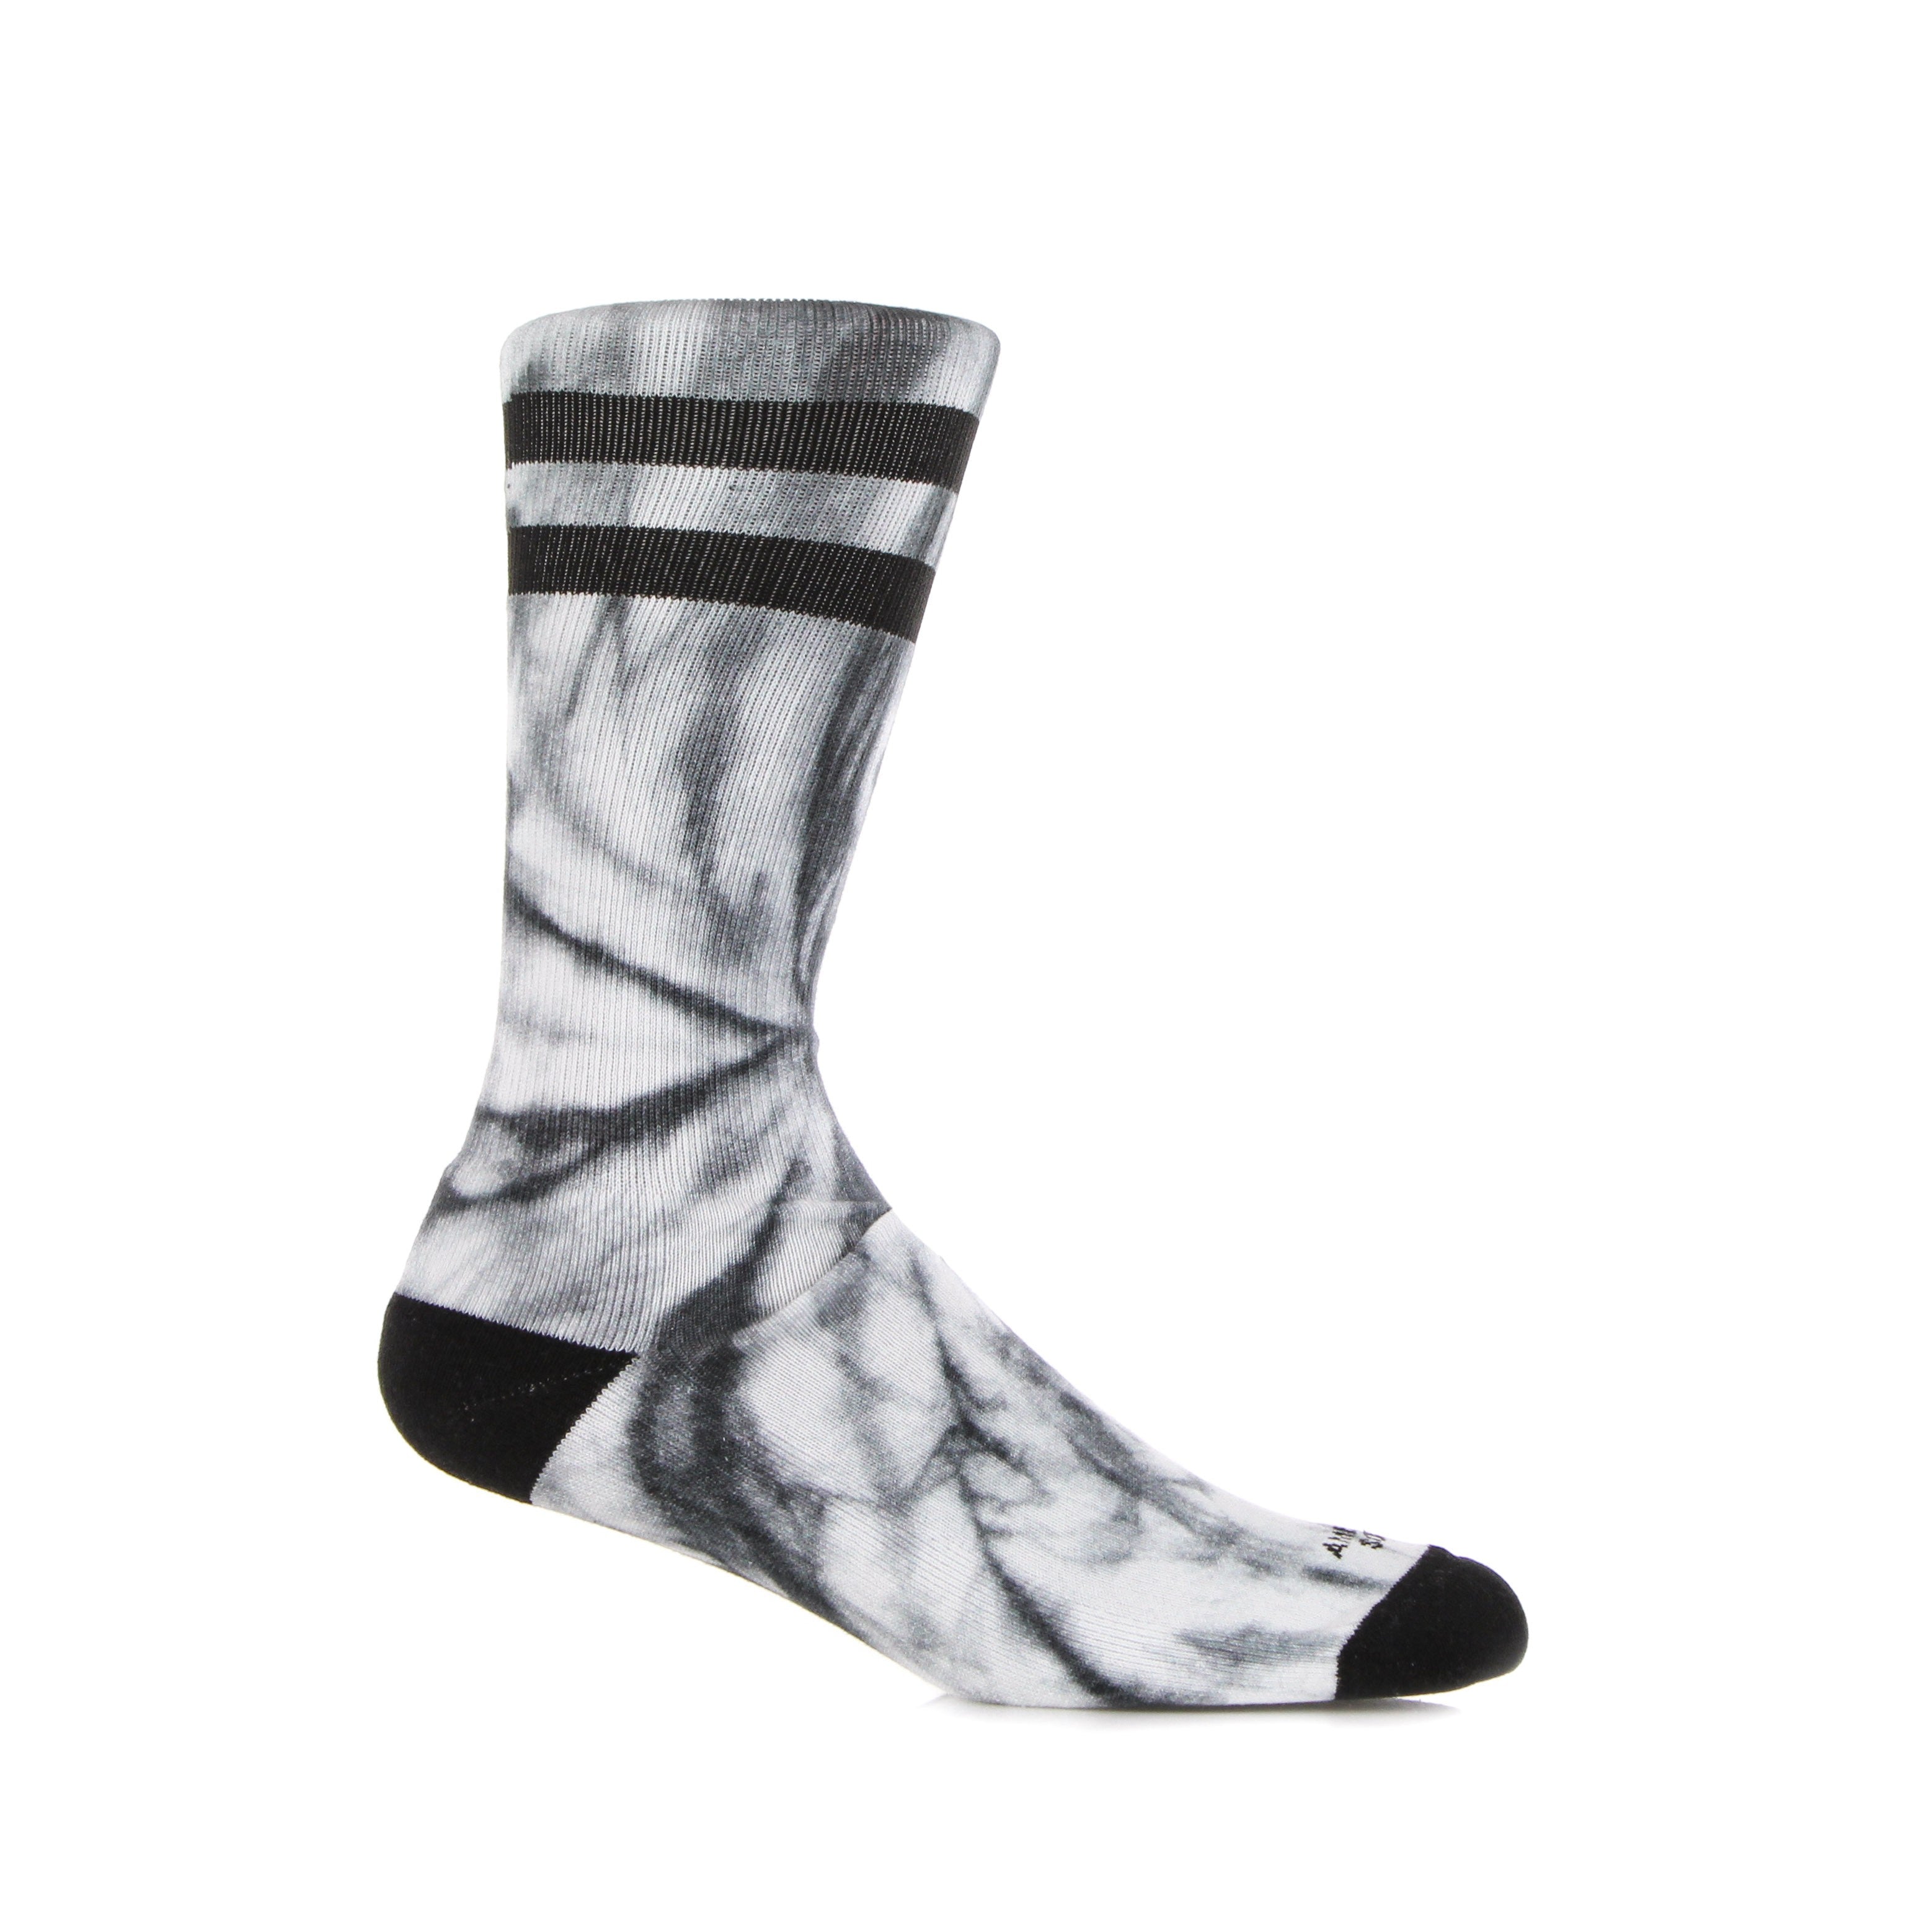 American Socks, Calza Media Uomo Tie Dye Monochrome, 